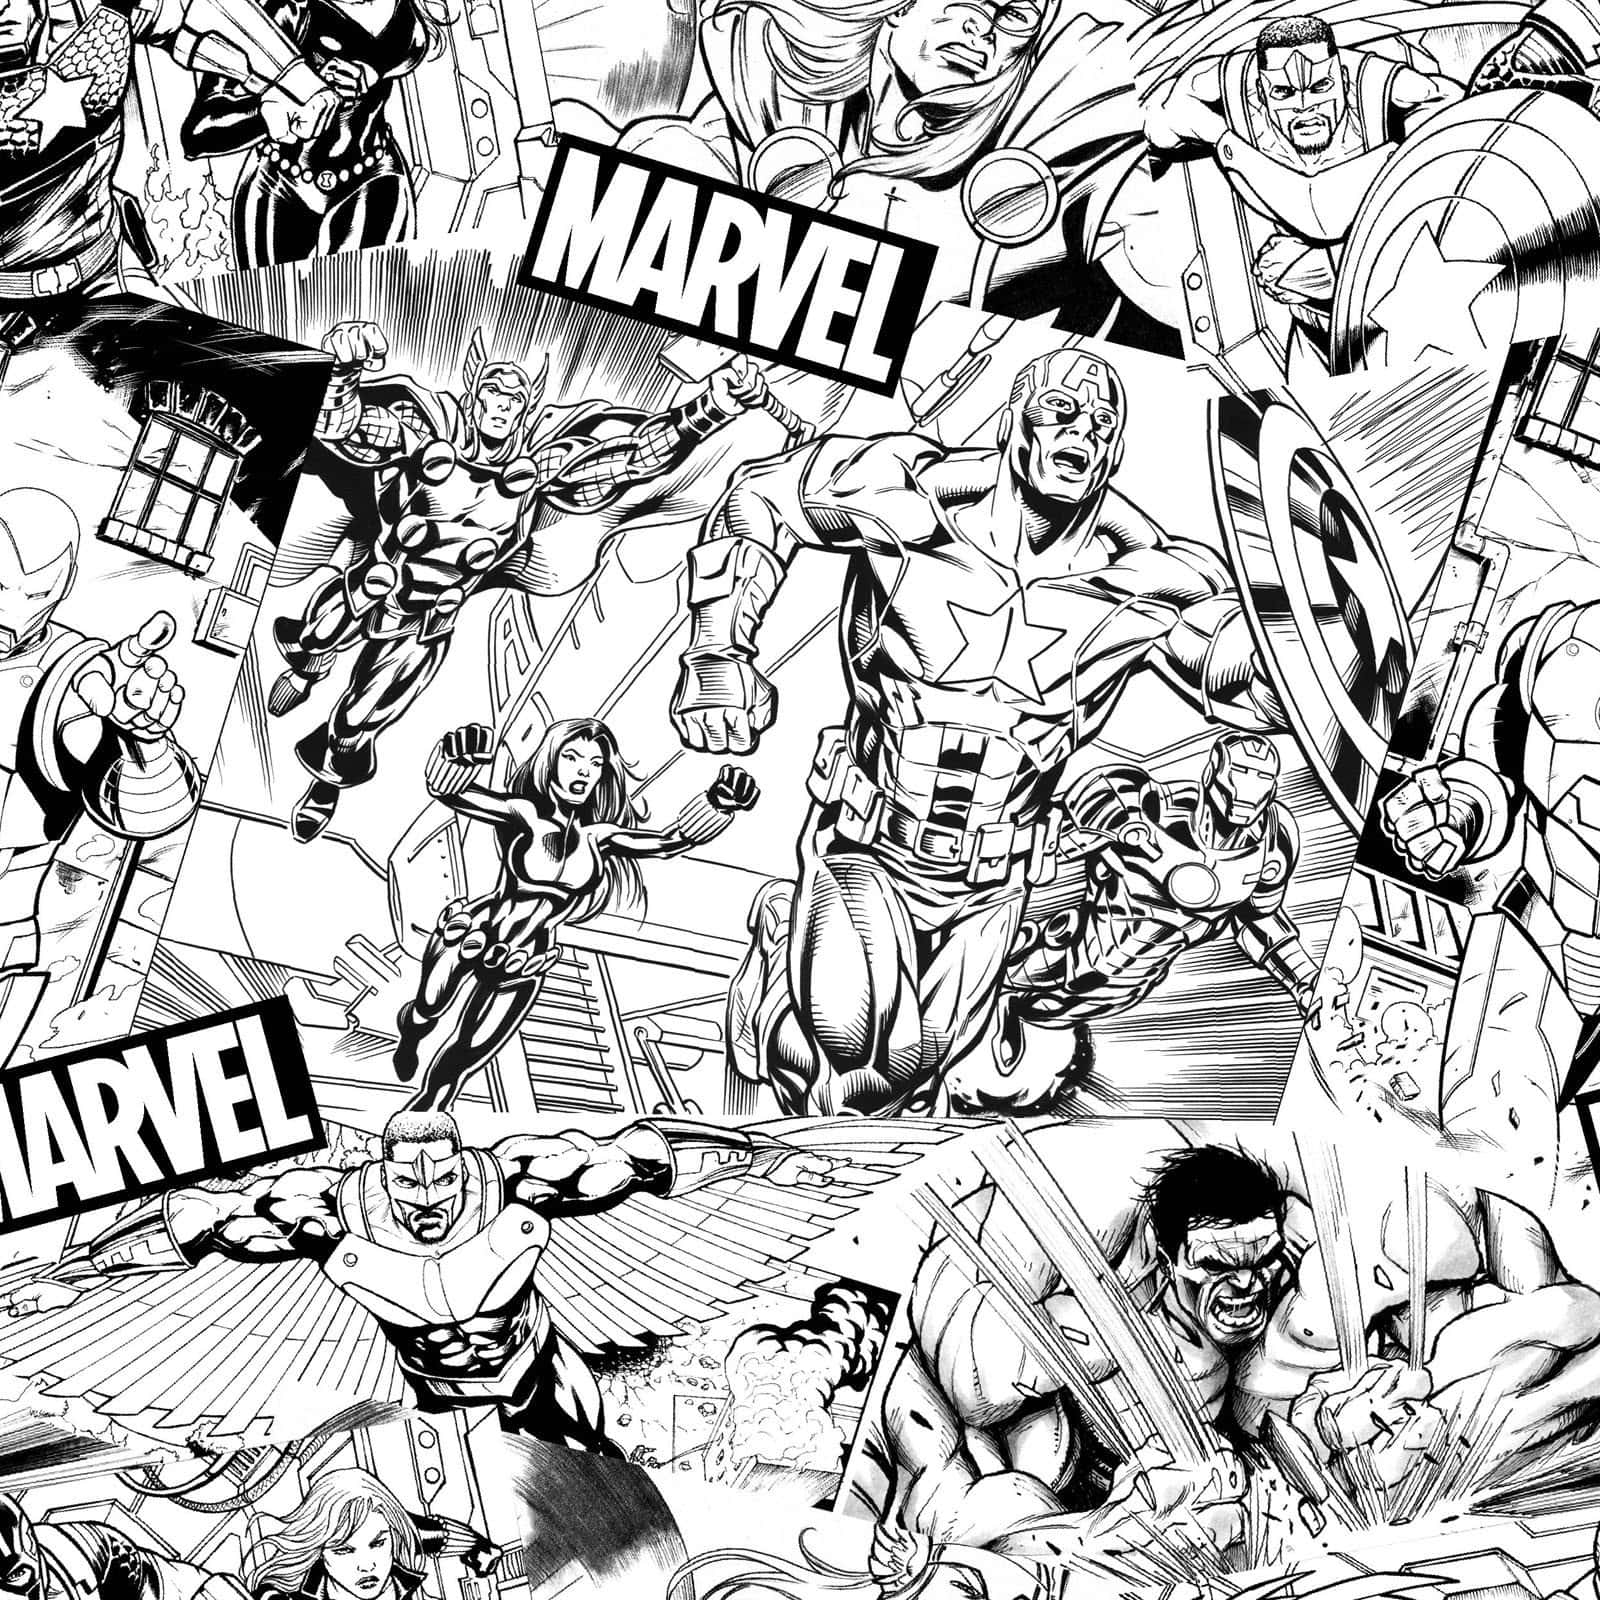 Marvel Heroes Unite in Stunning Black and White Wallpaper